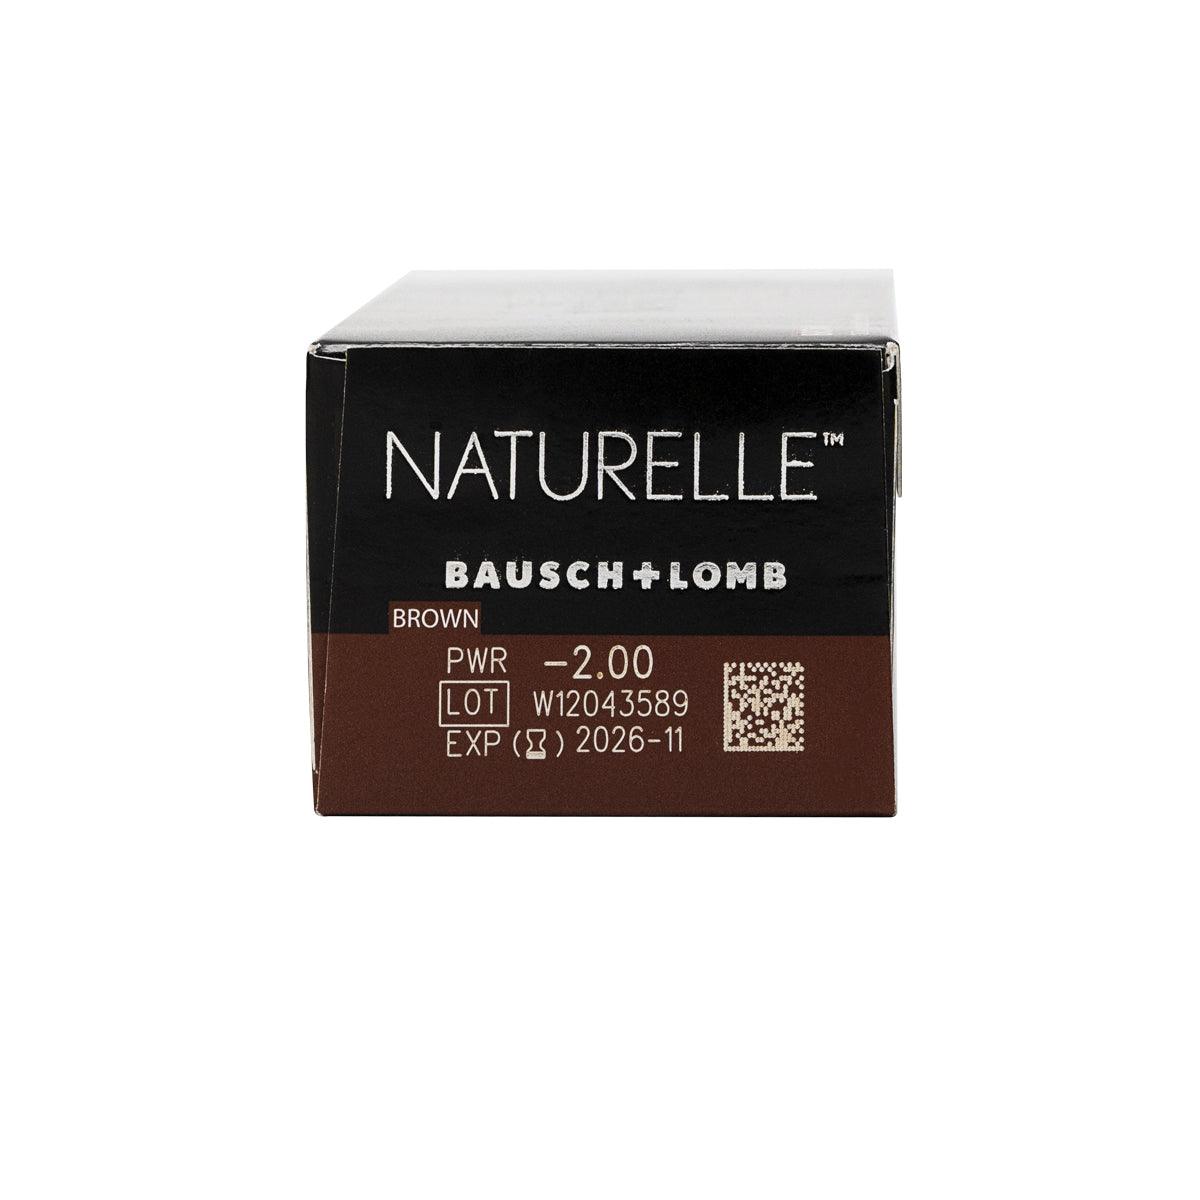 Bausch + Lomb Naturelle Brown - TA-TO.com